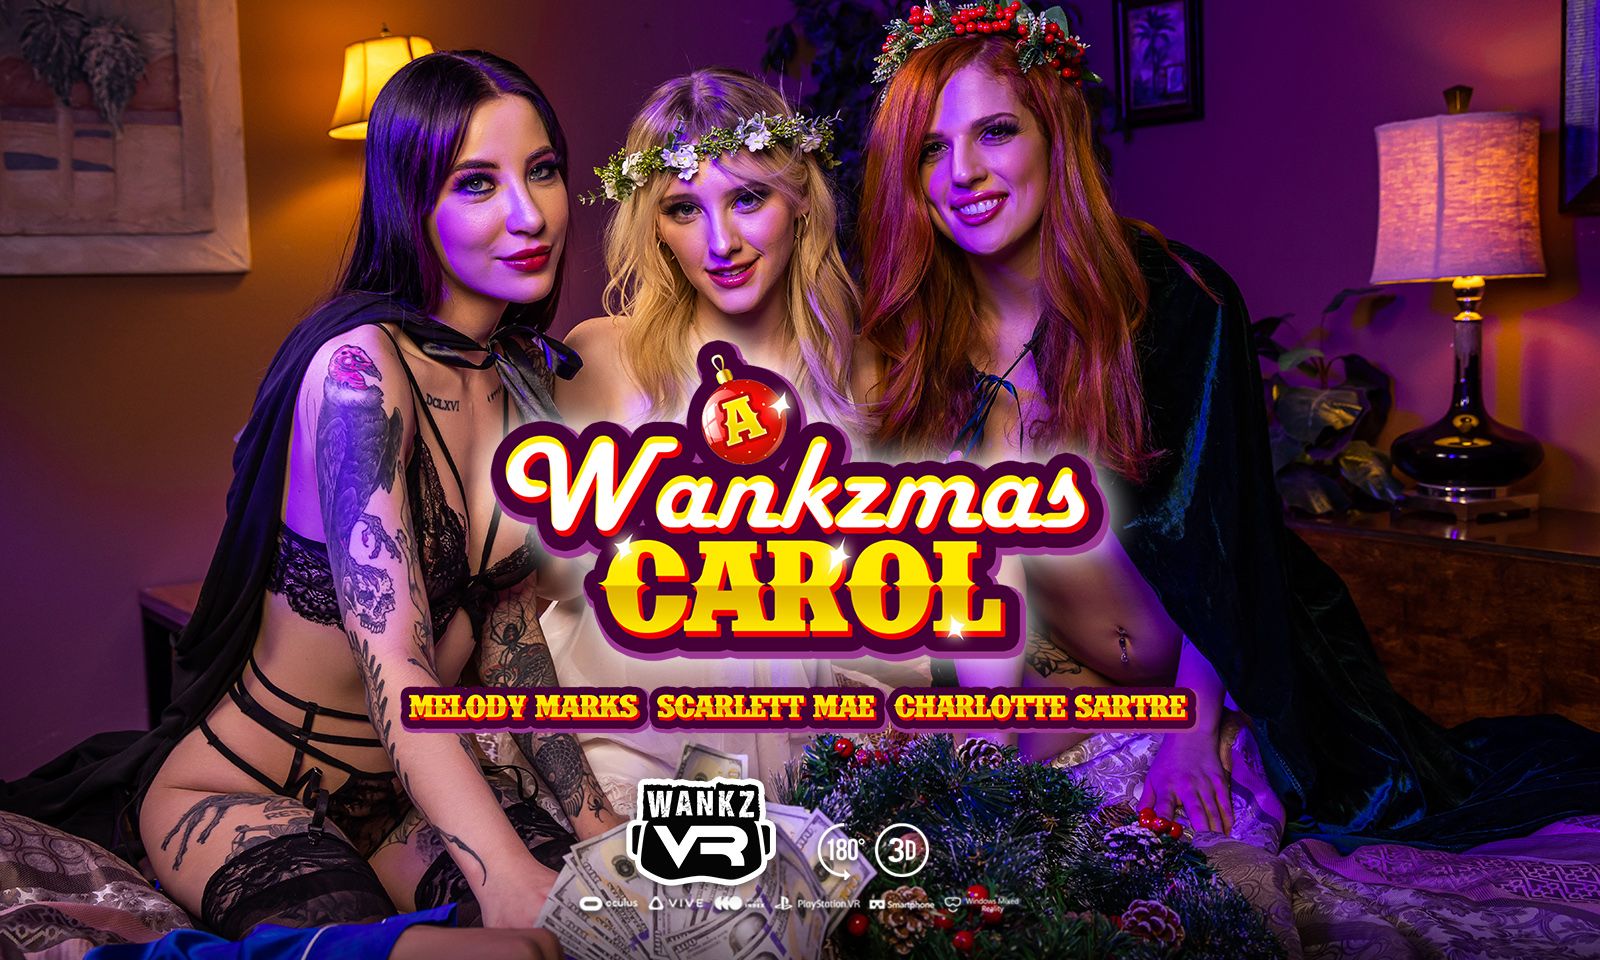 WankzVR Debuts 'A Wankzmas Carol' Parody Release